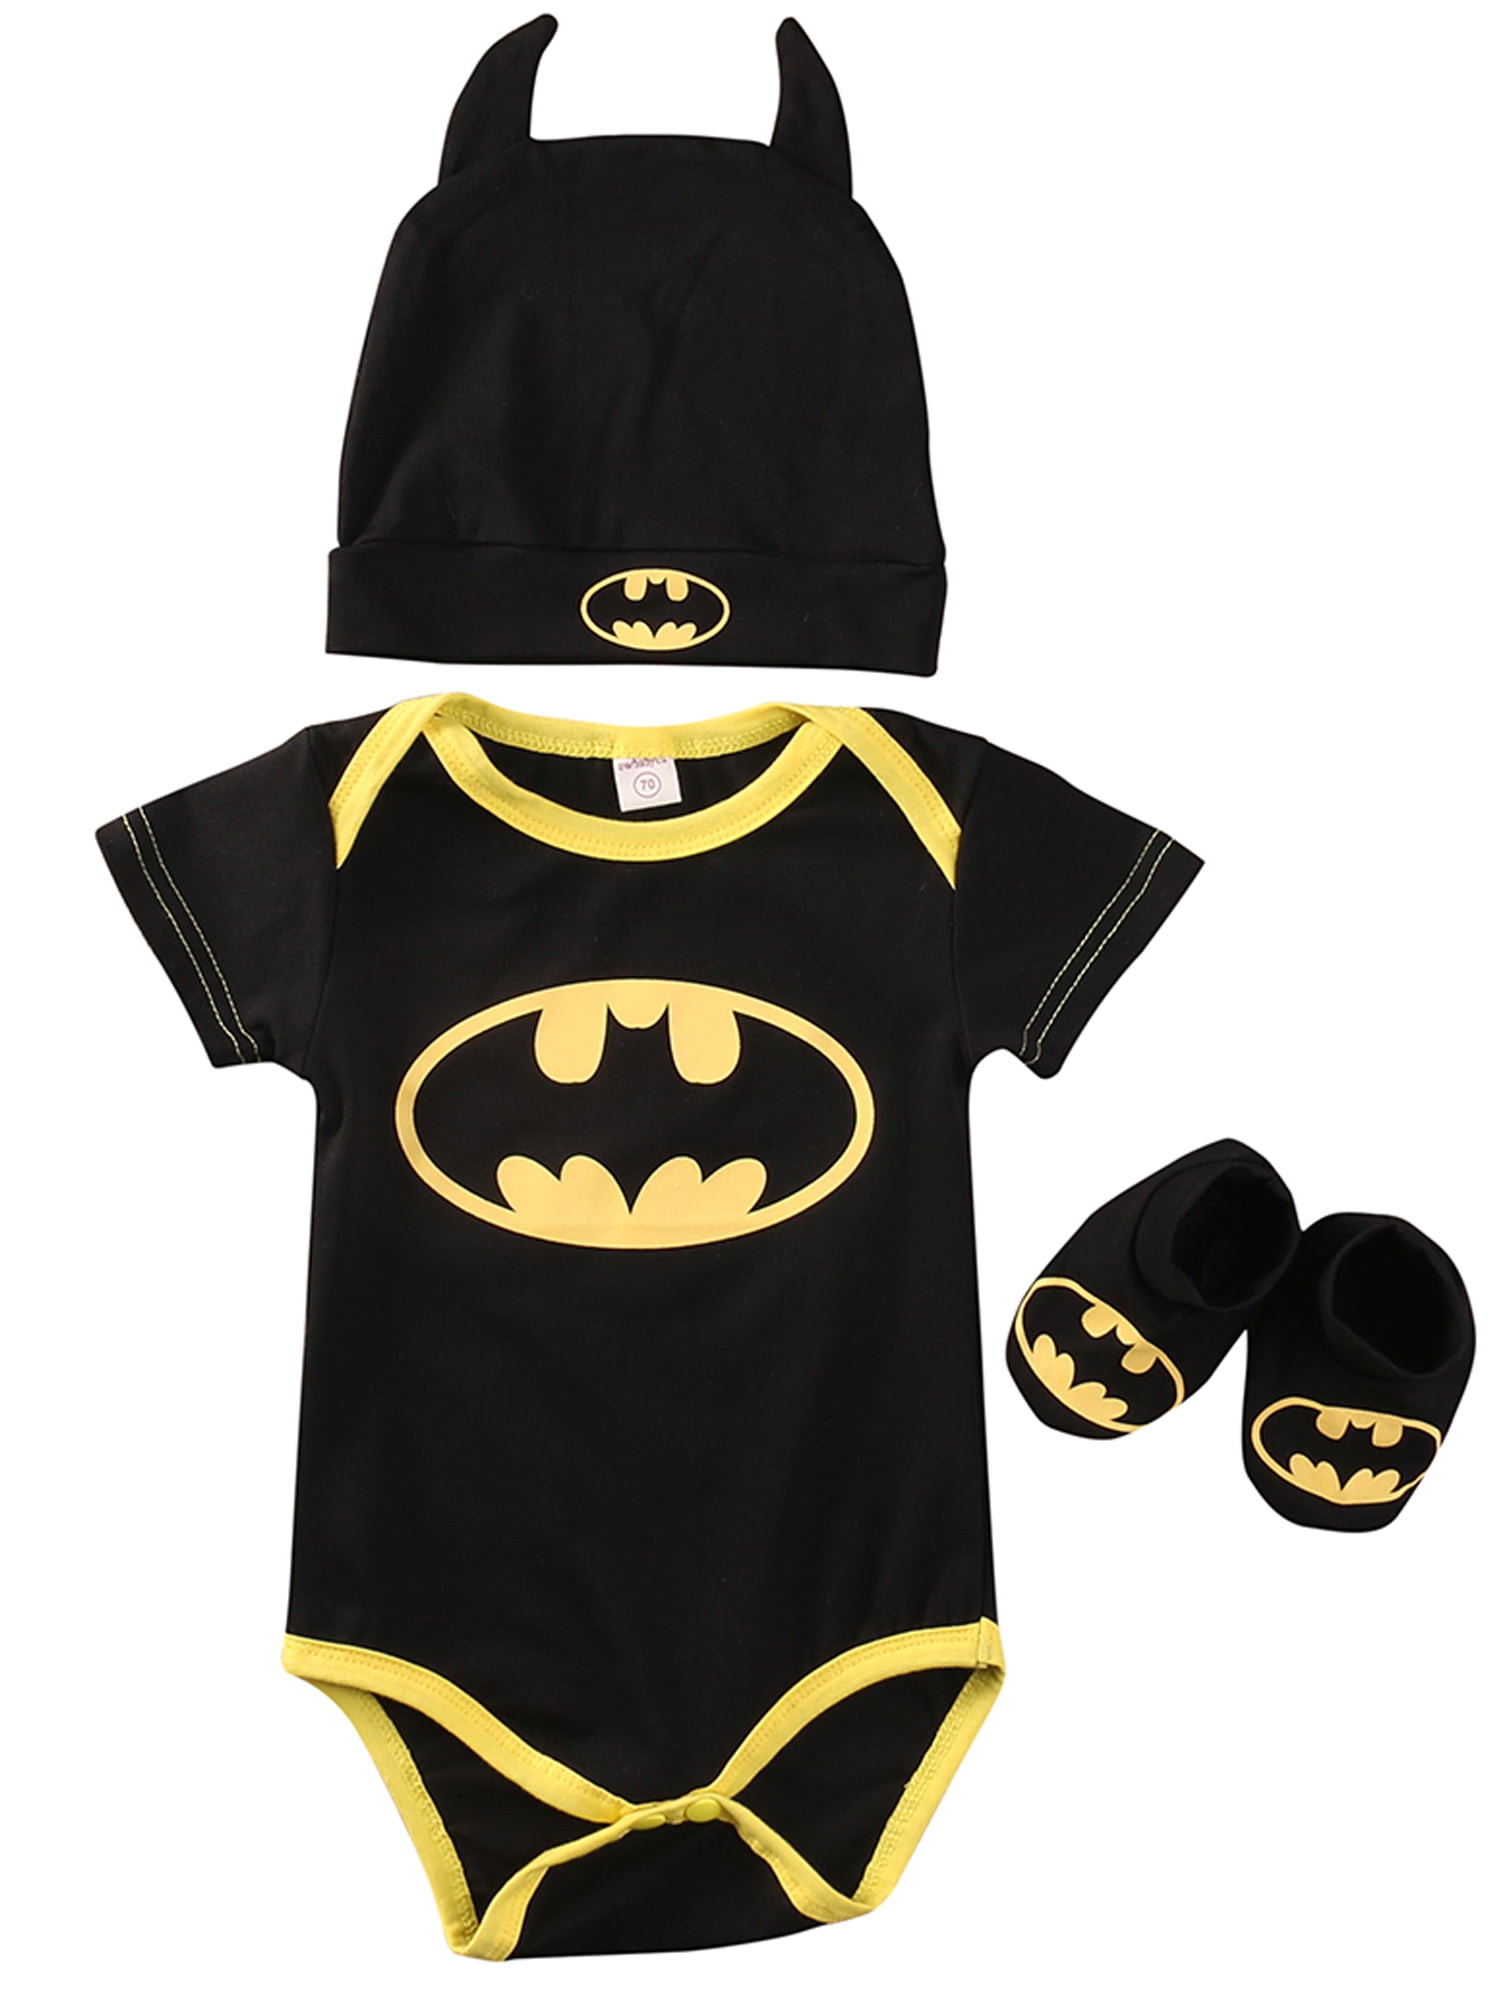 Official Licensed Batman Long Sleeve Cotton Costume Boys Bodysuit size 0-24mos 